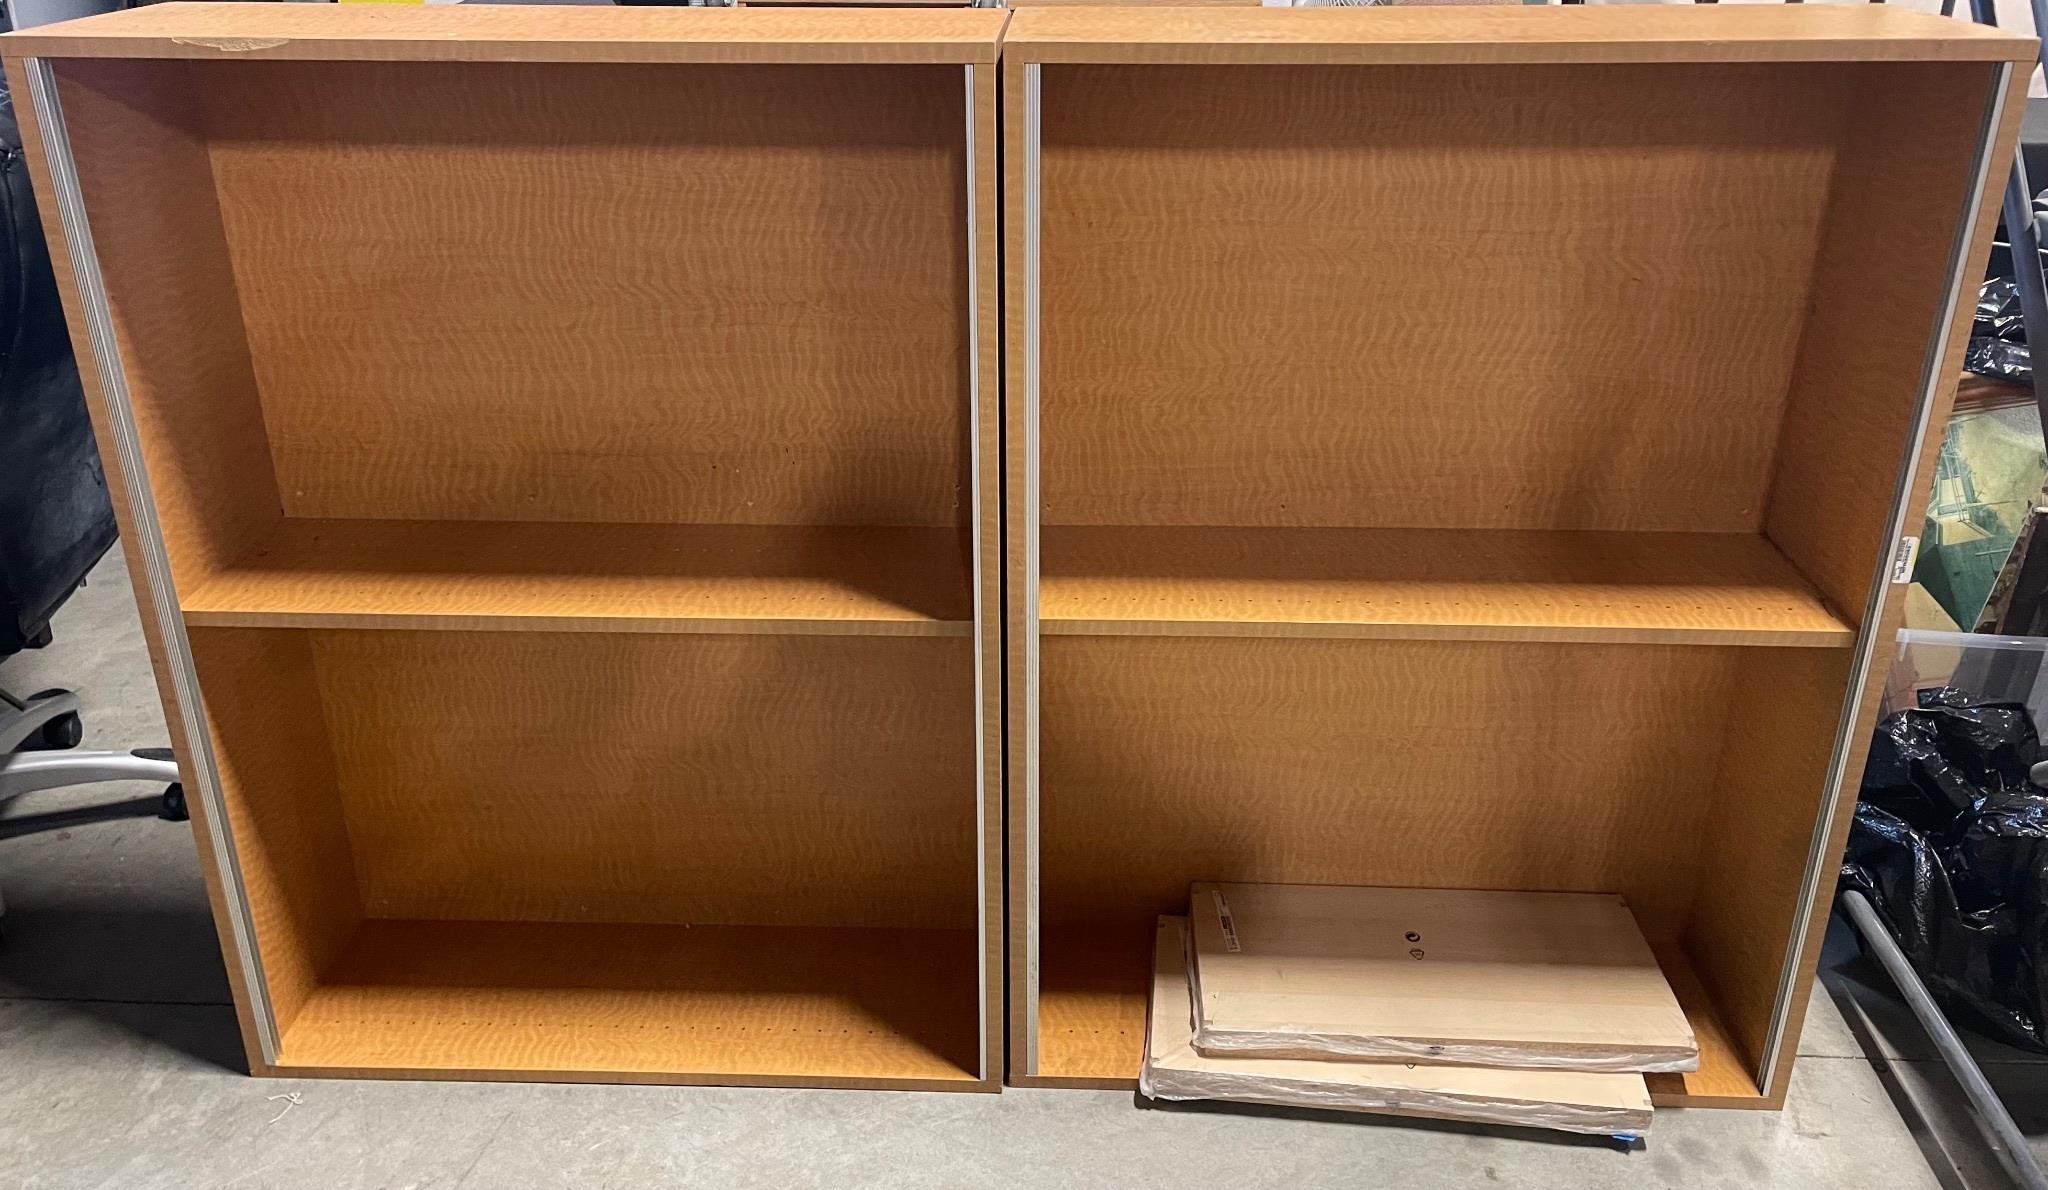 2 Matching Bookshelves